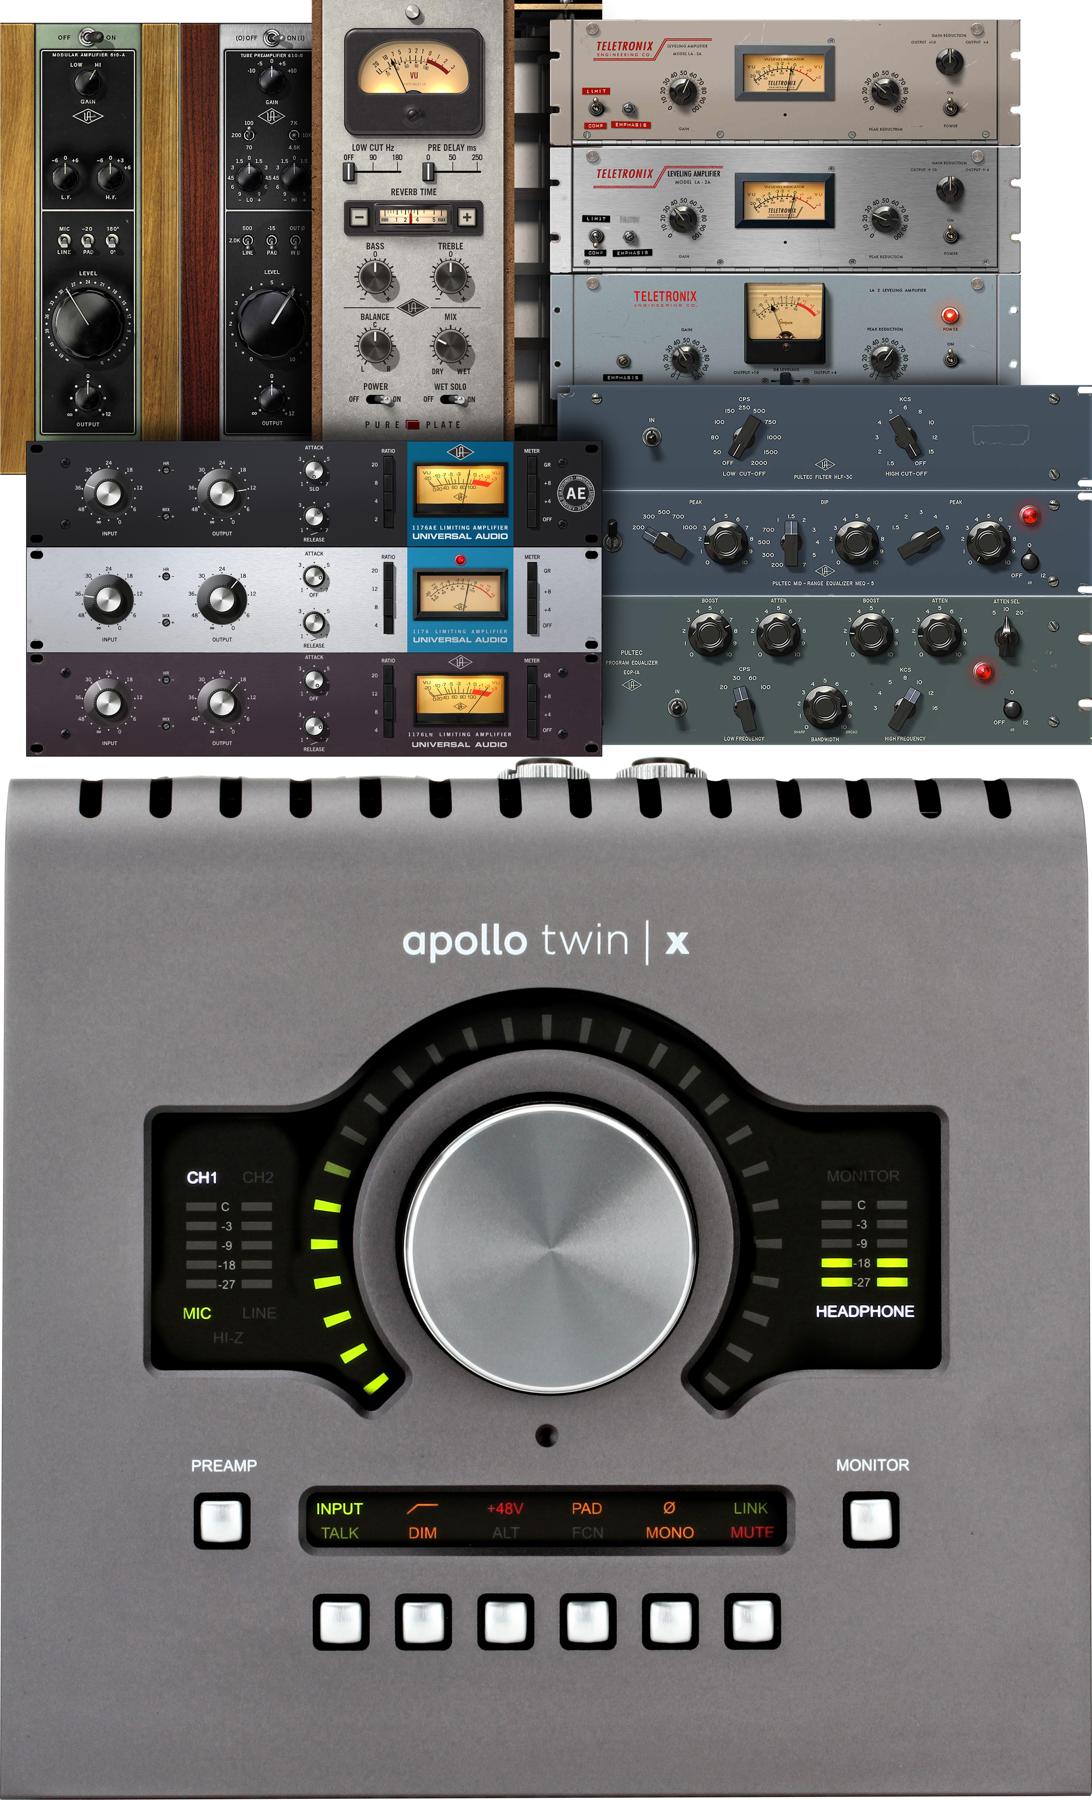 1. Universal Audio Apollo Twin